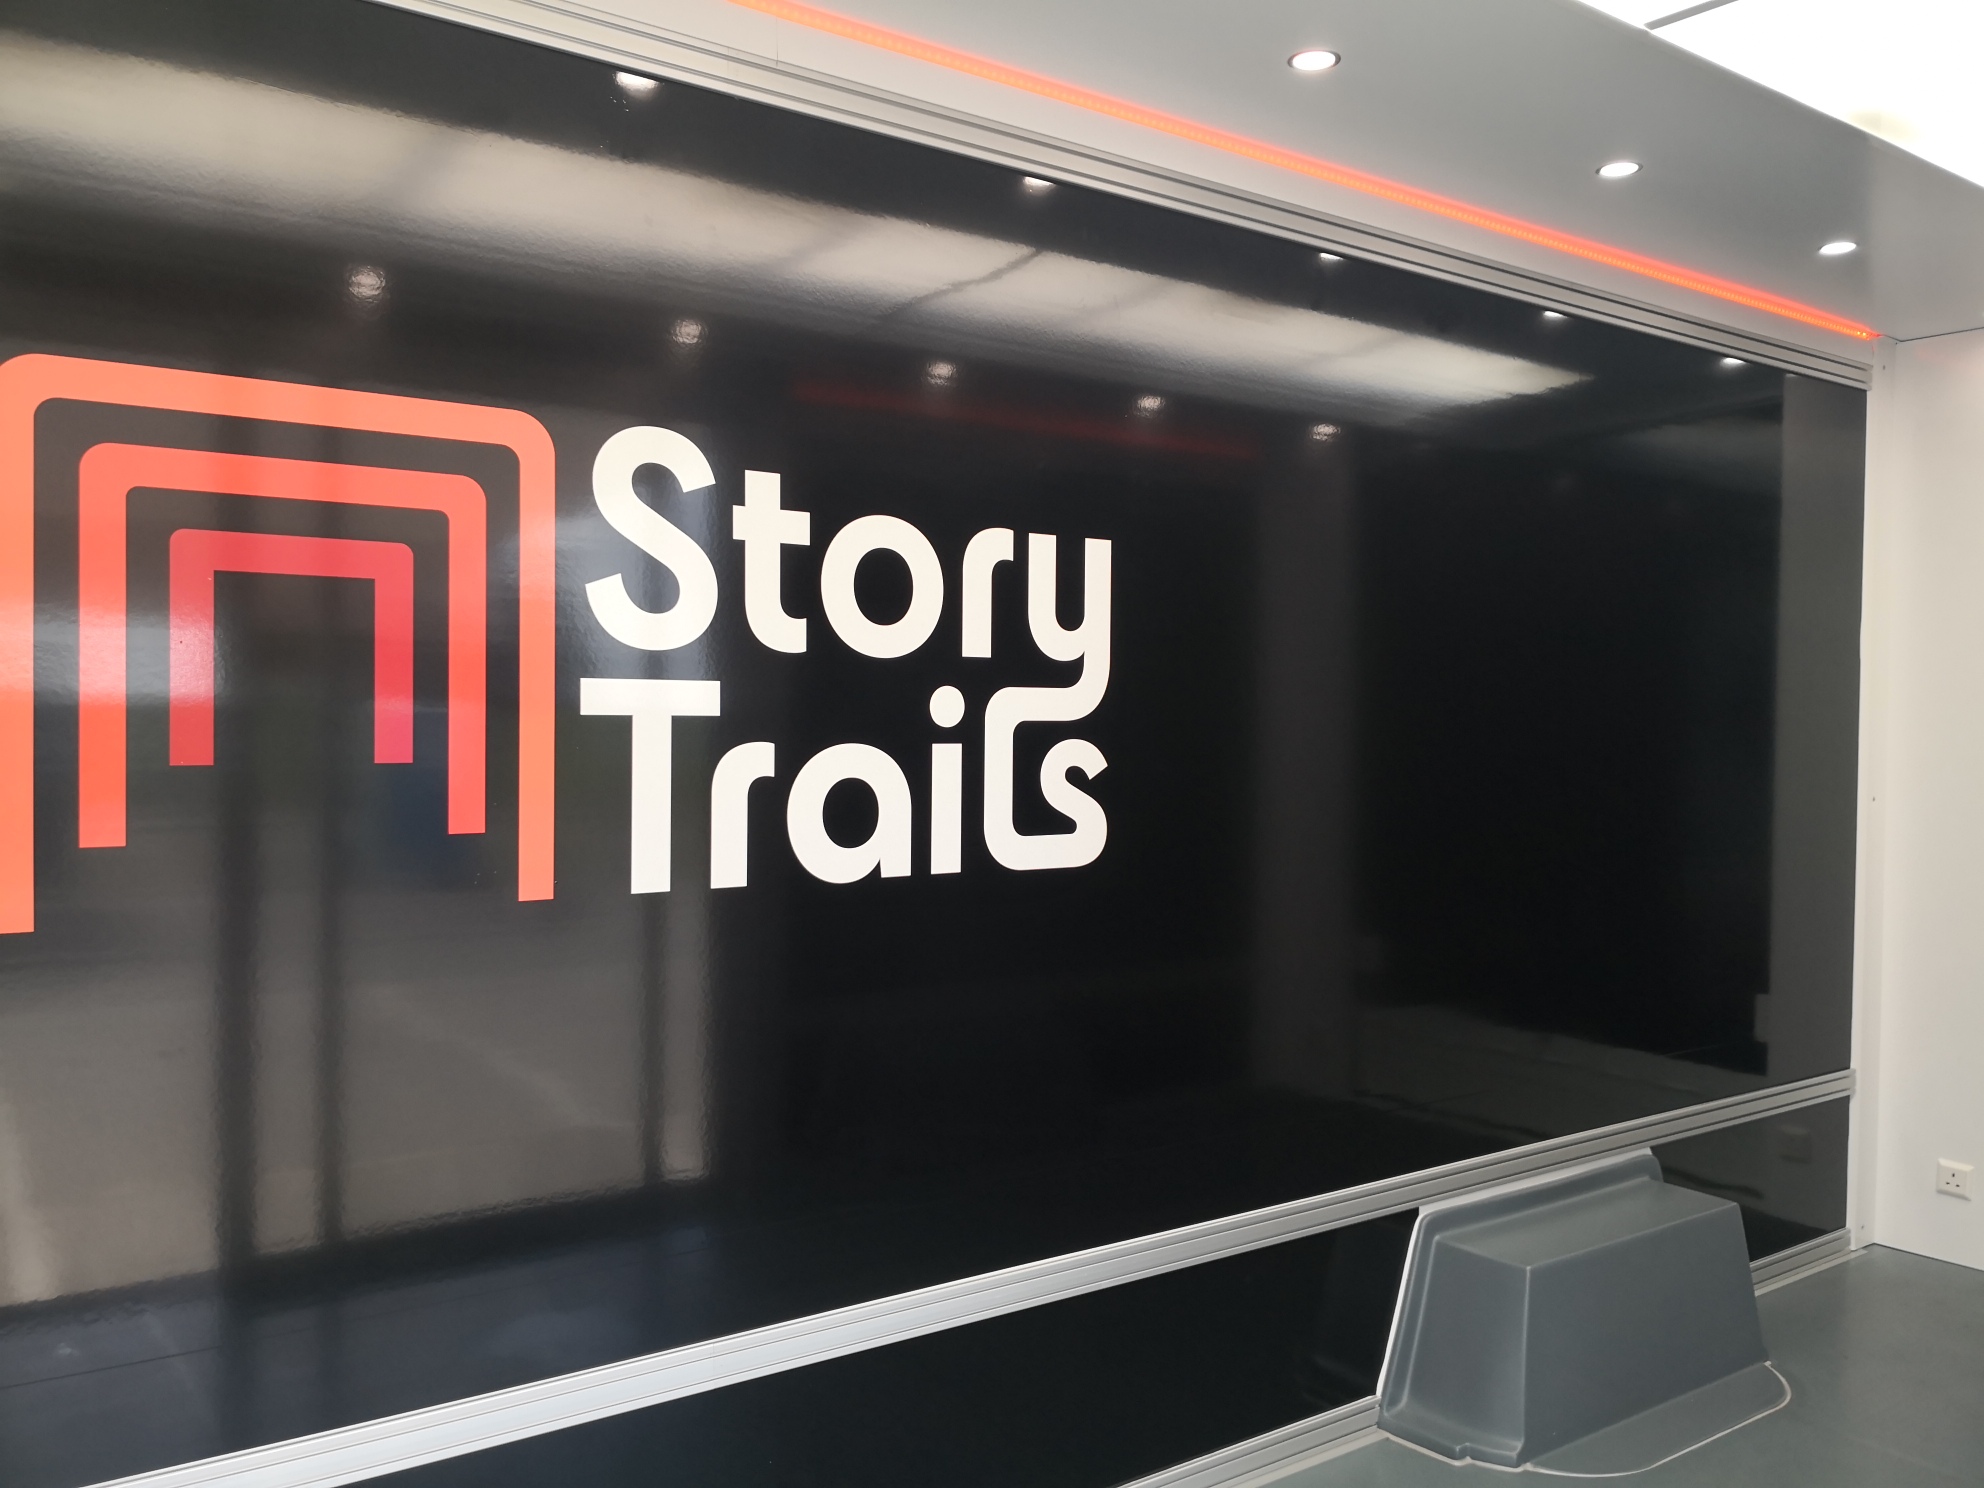 StoryTrails promotional vehicle graphic wrapped exhibition unit on UK tour van